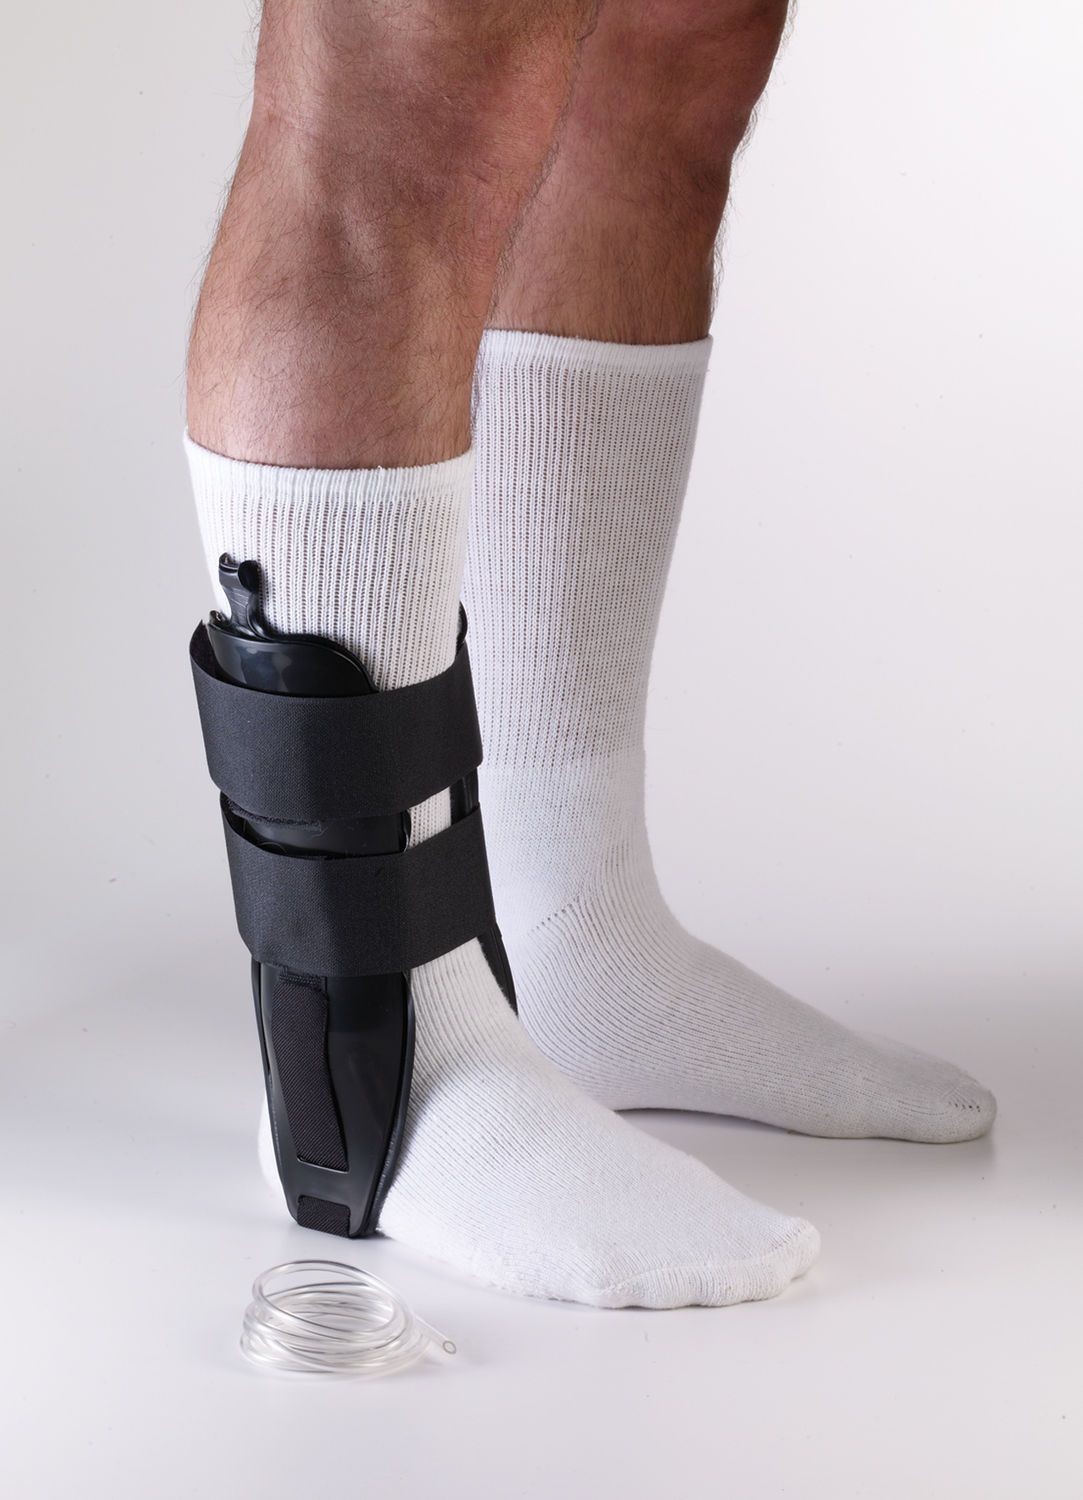 Ankle splint (orthopedic immobilization) 75-1015 Corflex